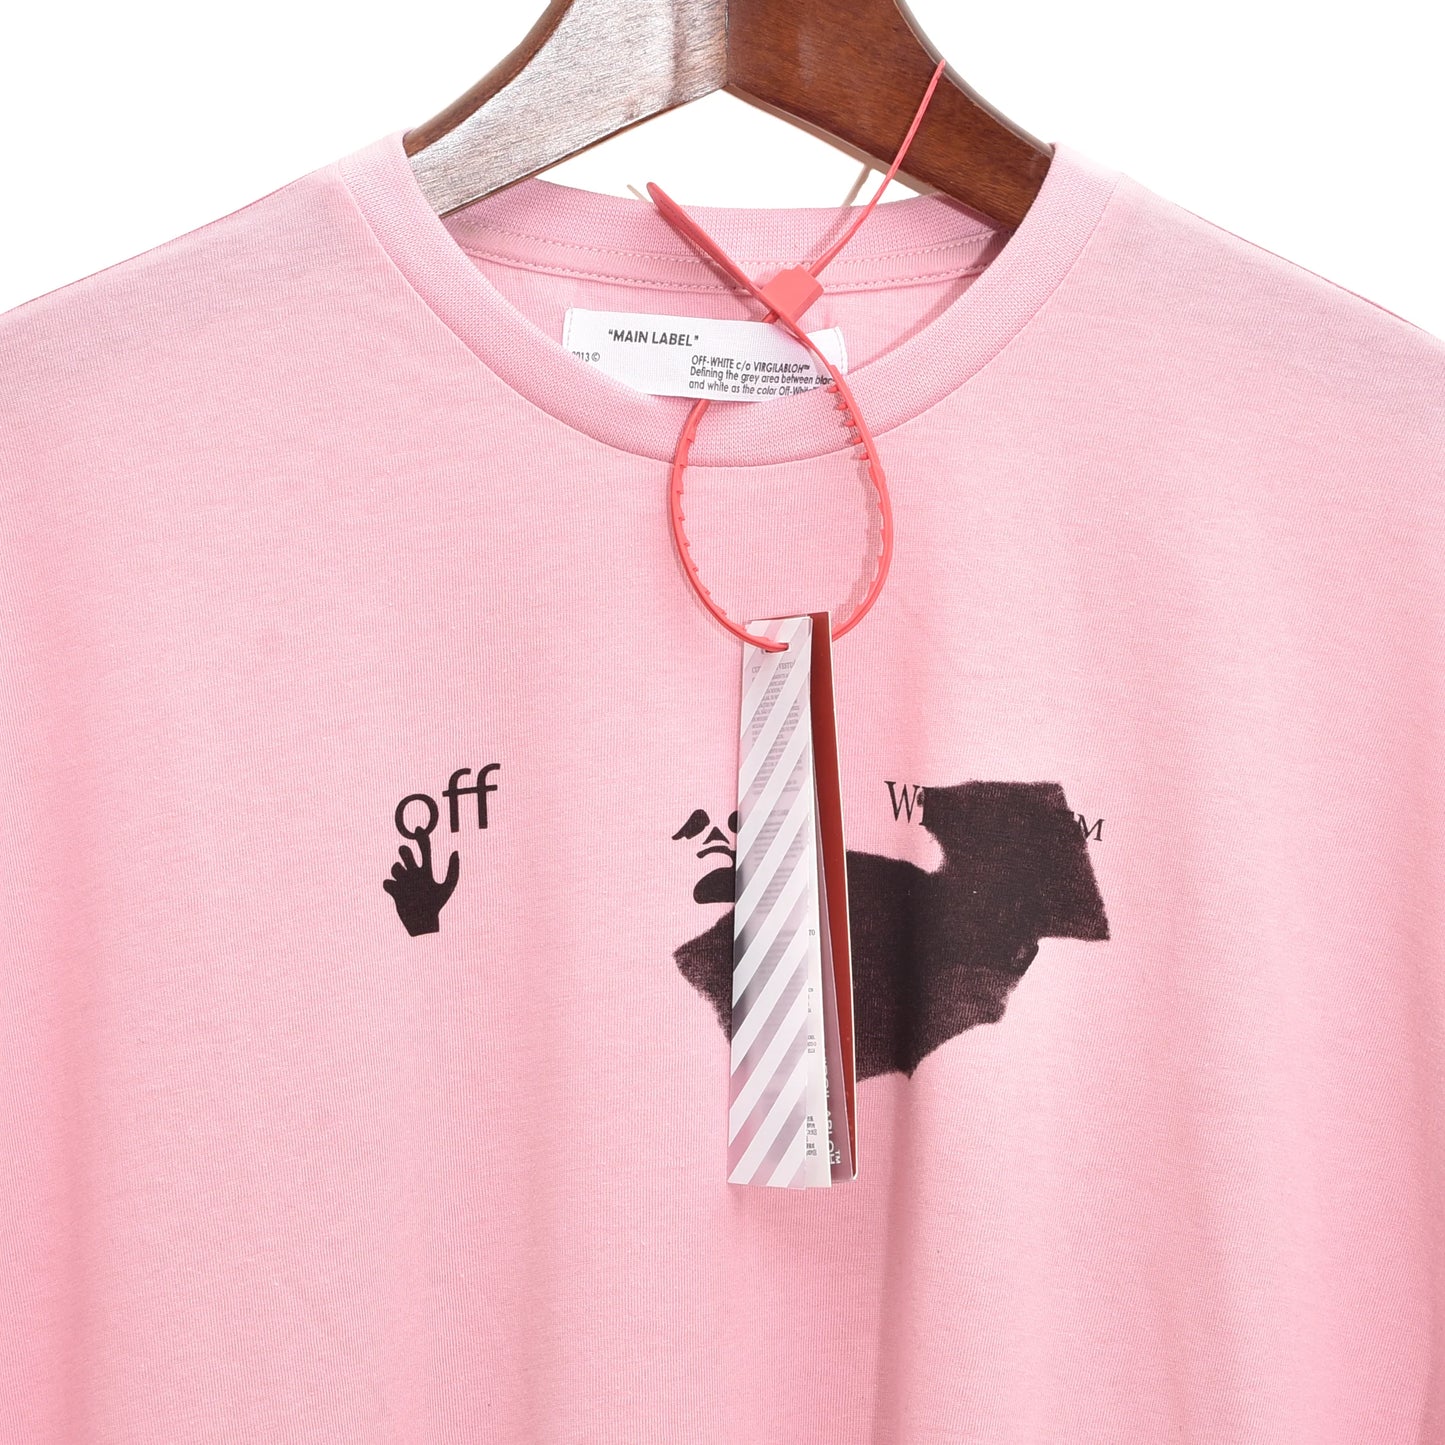 Off White Pink Hand Off Drop Shoulder Tee Shirt (Premium Batch)